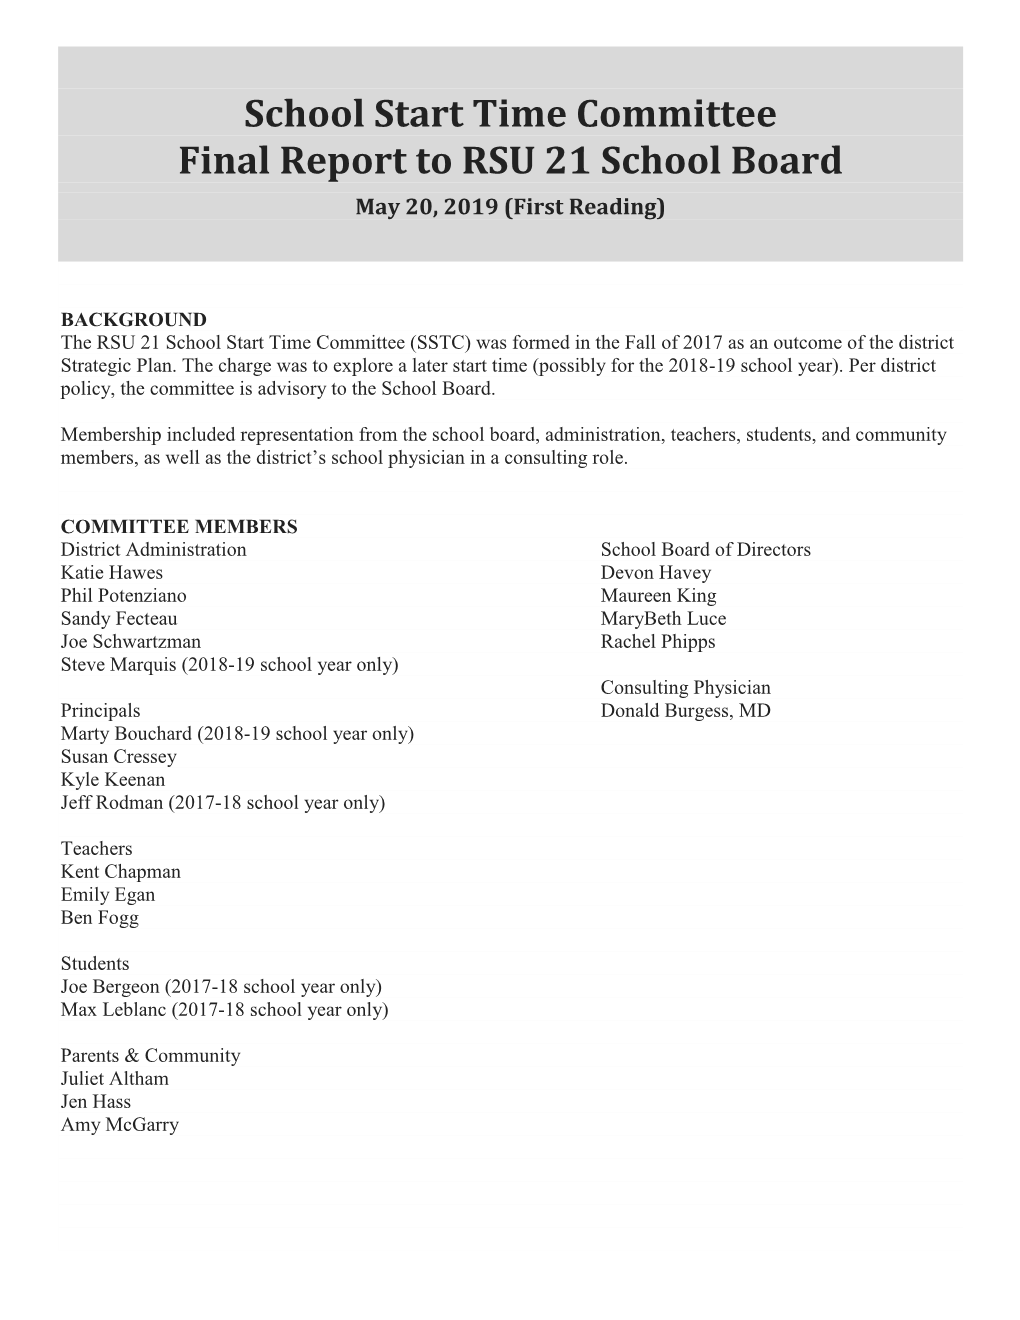 School Start Time Committee Final Report to RSU 21 School Board